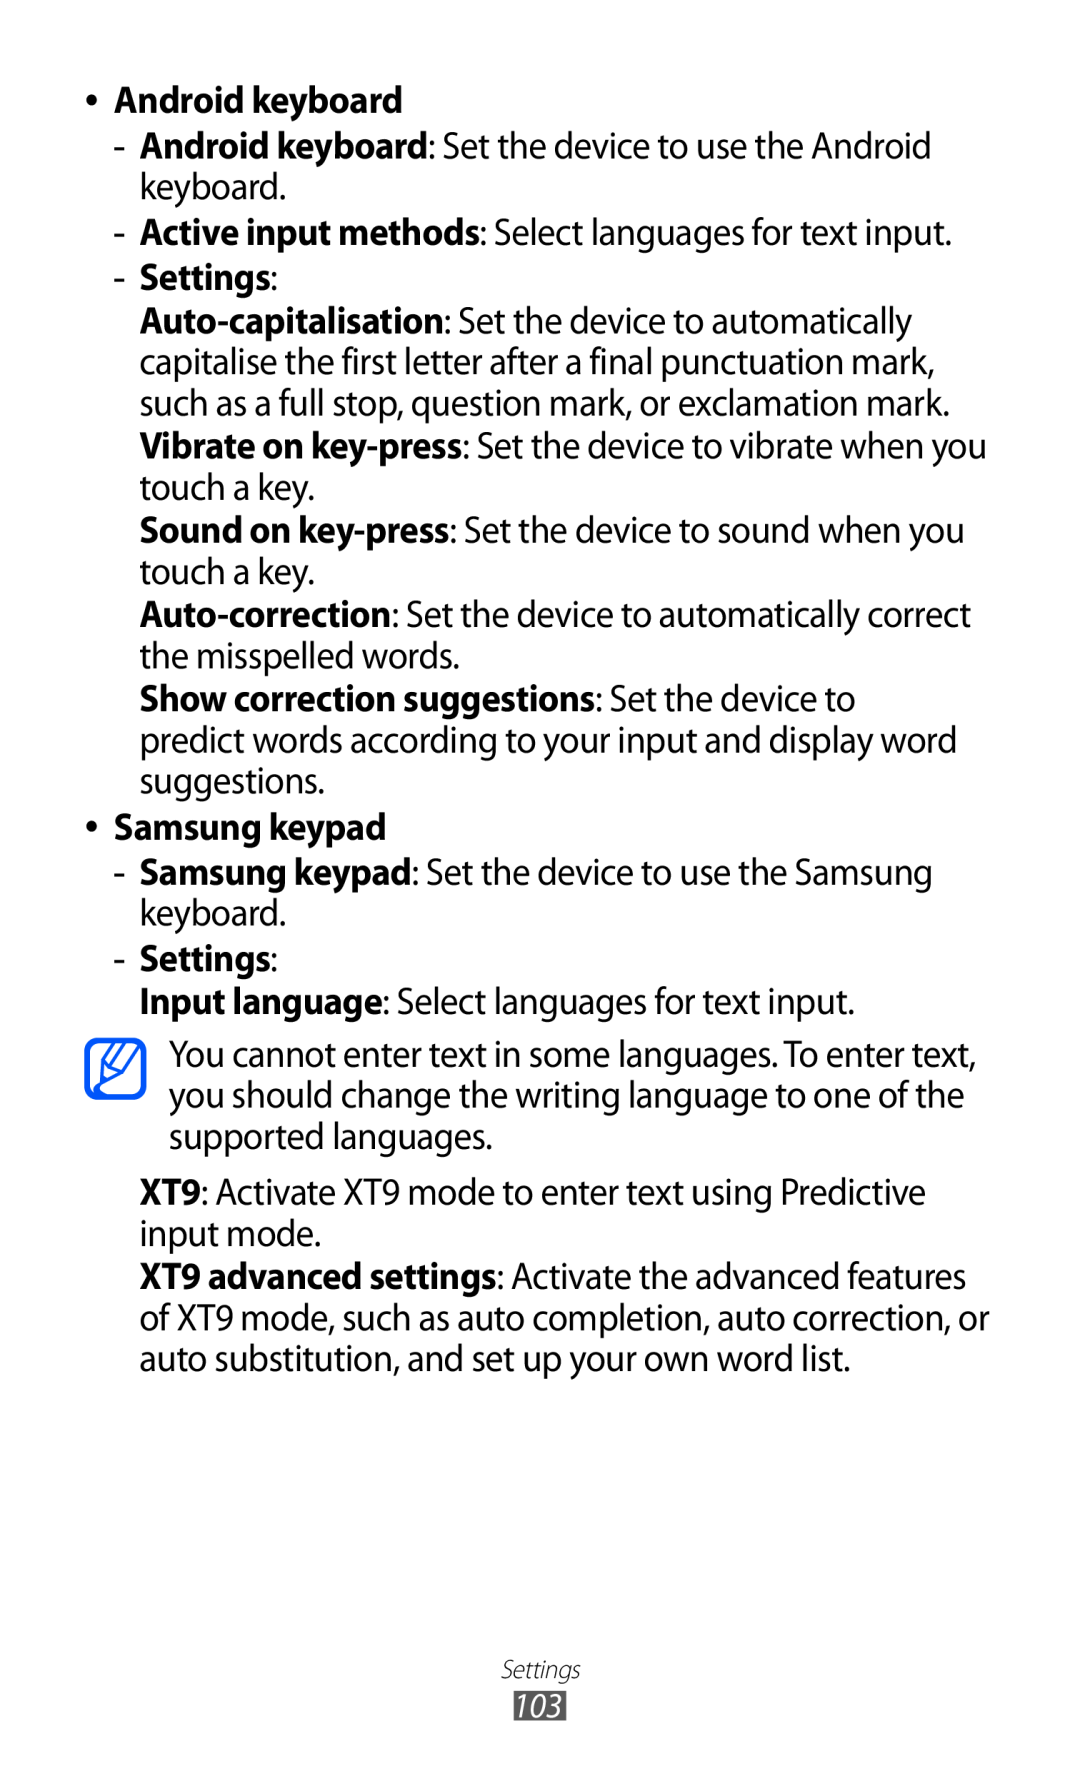 Samsung GT-P7310FKAAUT, GT-P7310FKEXEF, GT-P7310UWEXEF, GT-P7310UWAXEF manual Android keyboard, Samsung keypad, Settings 